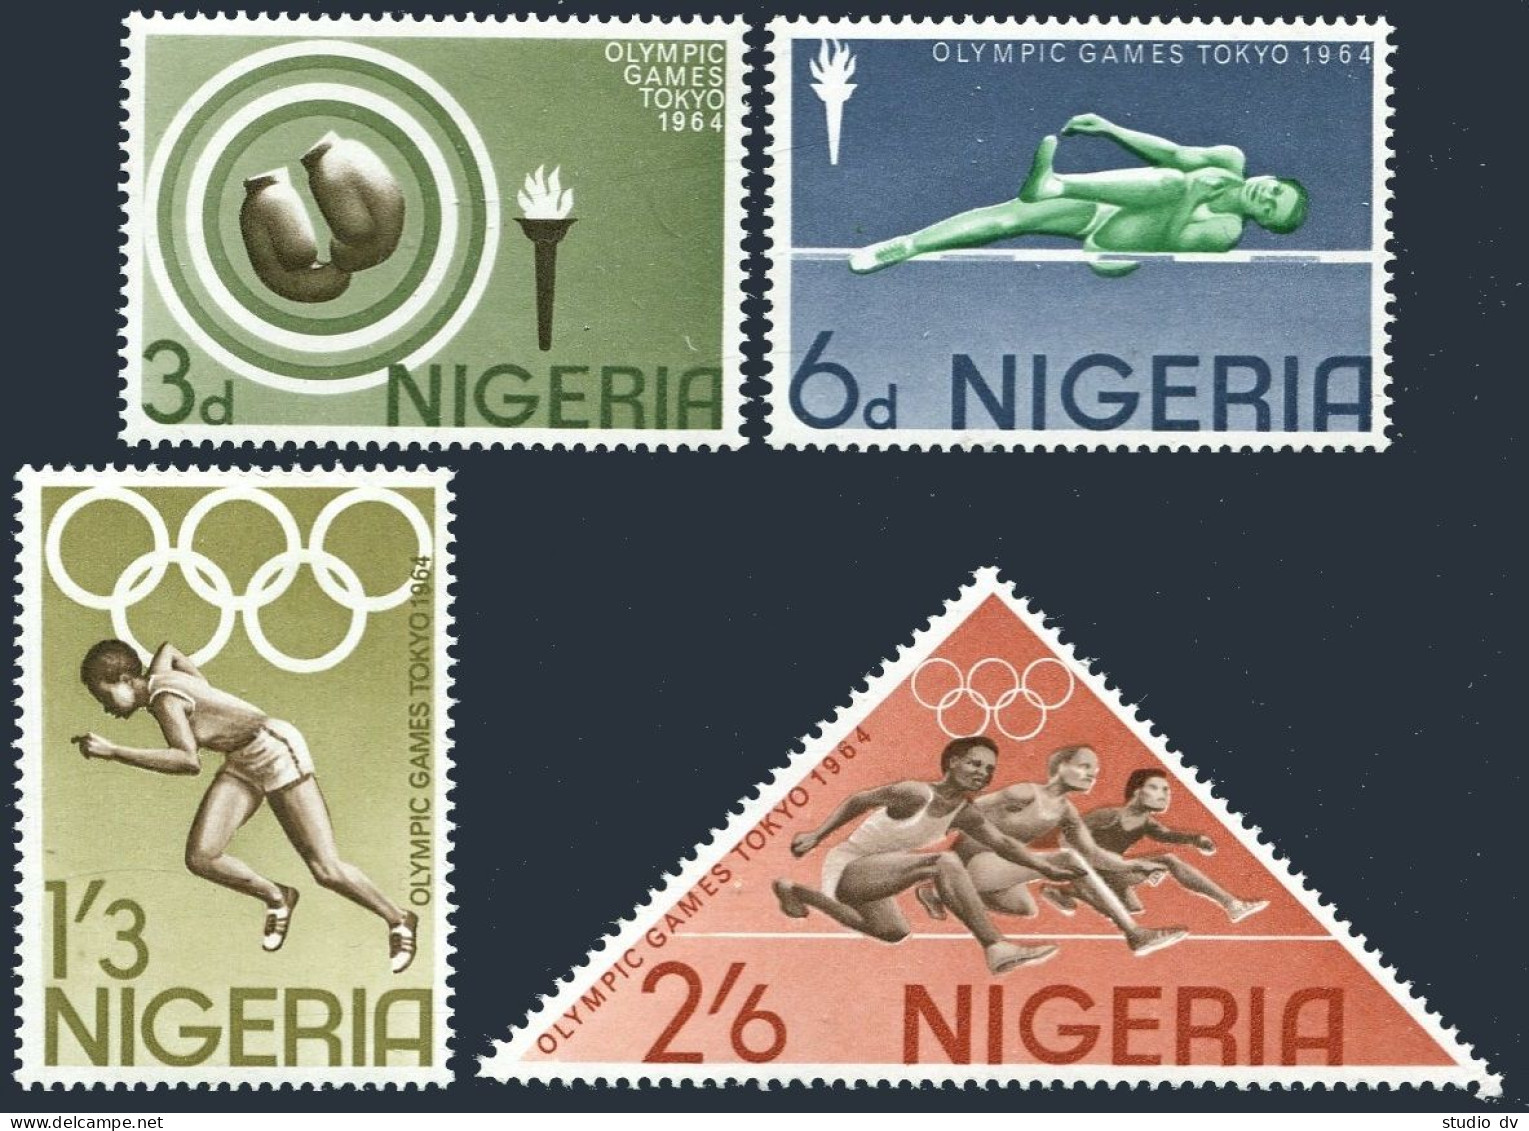 Nigeria 165-168,168a,MNH. Olympics Tokyo-1964.Boxing,High Jump,Running,Hurdling. - Nigeria (1961-...)